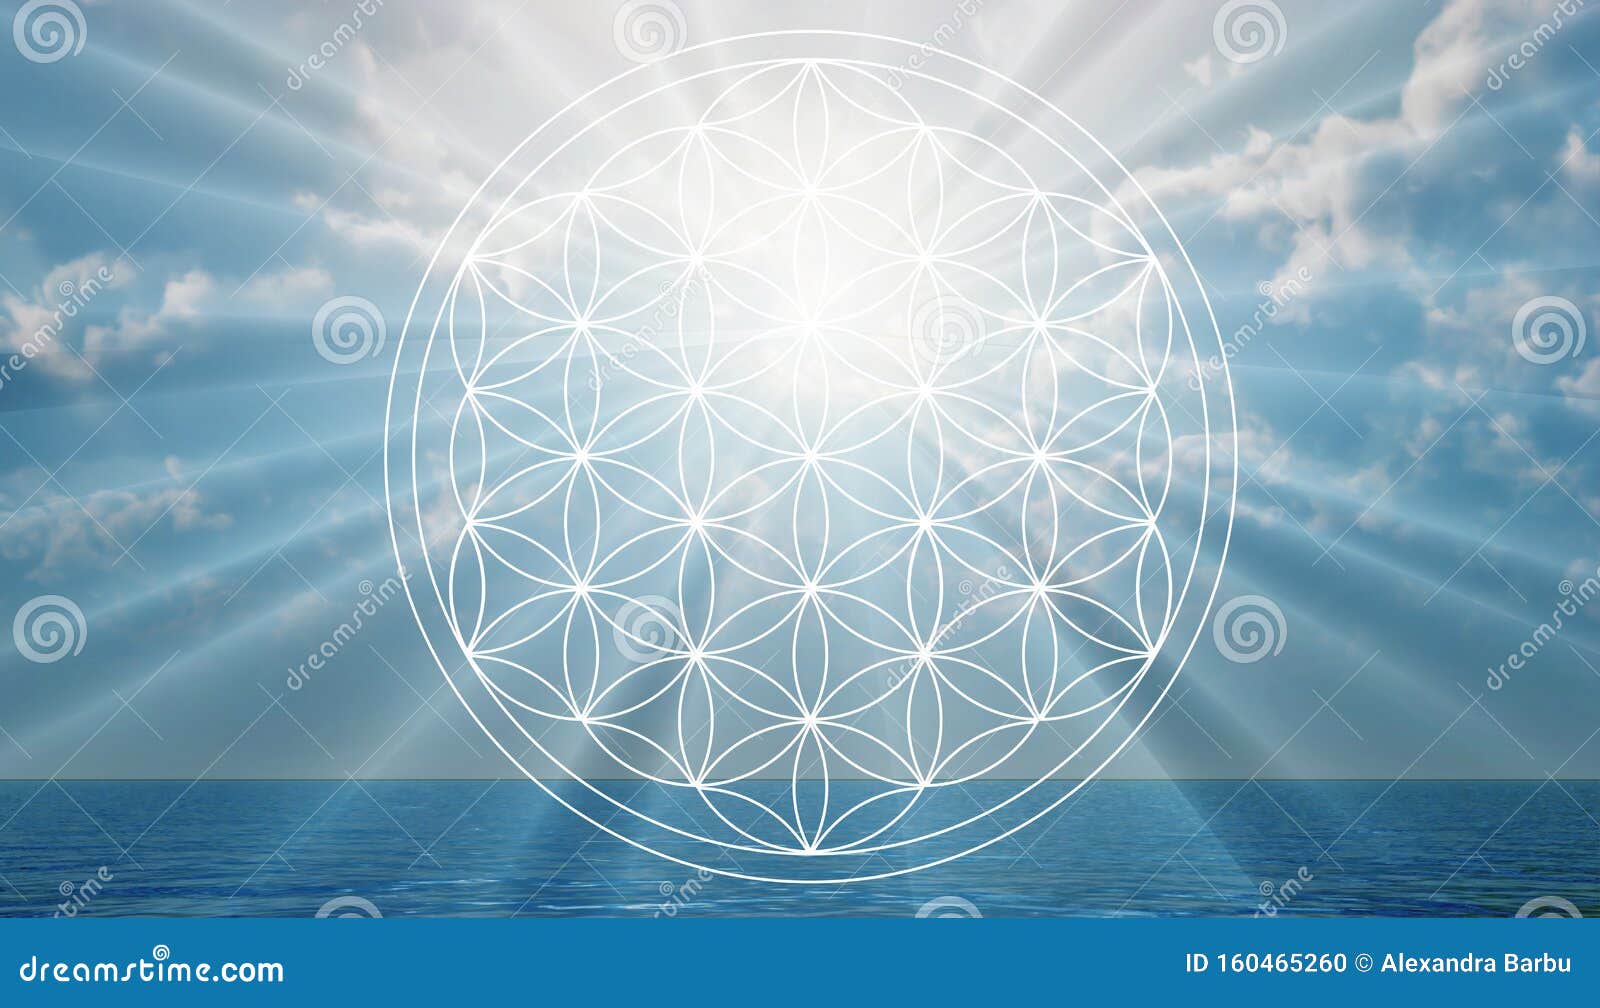 Flower Of Life Symbol In The Sky Portal Life Stock Photo Image Of Light Harmonic